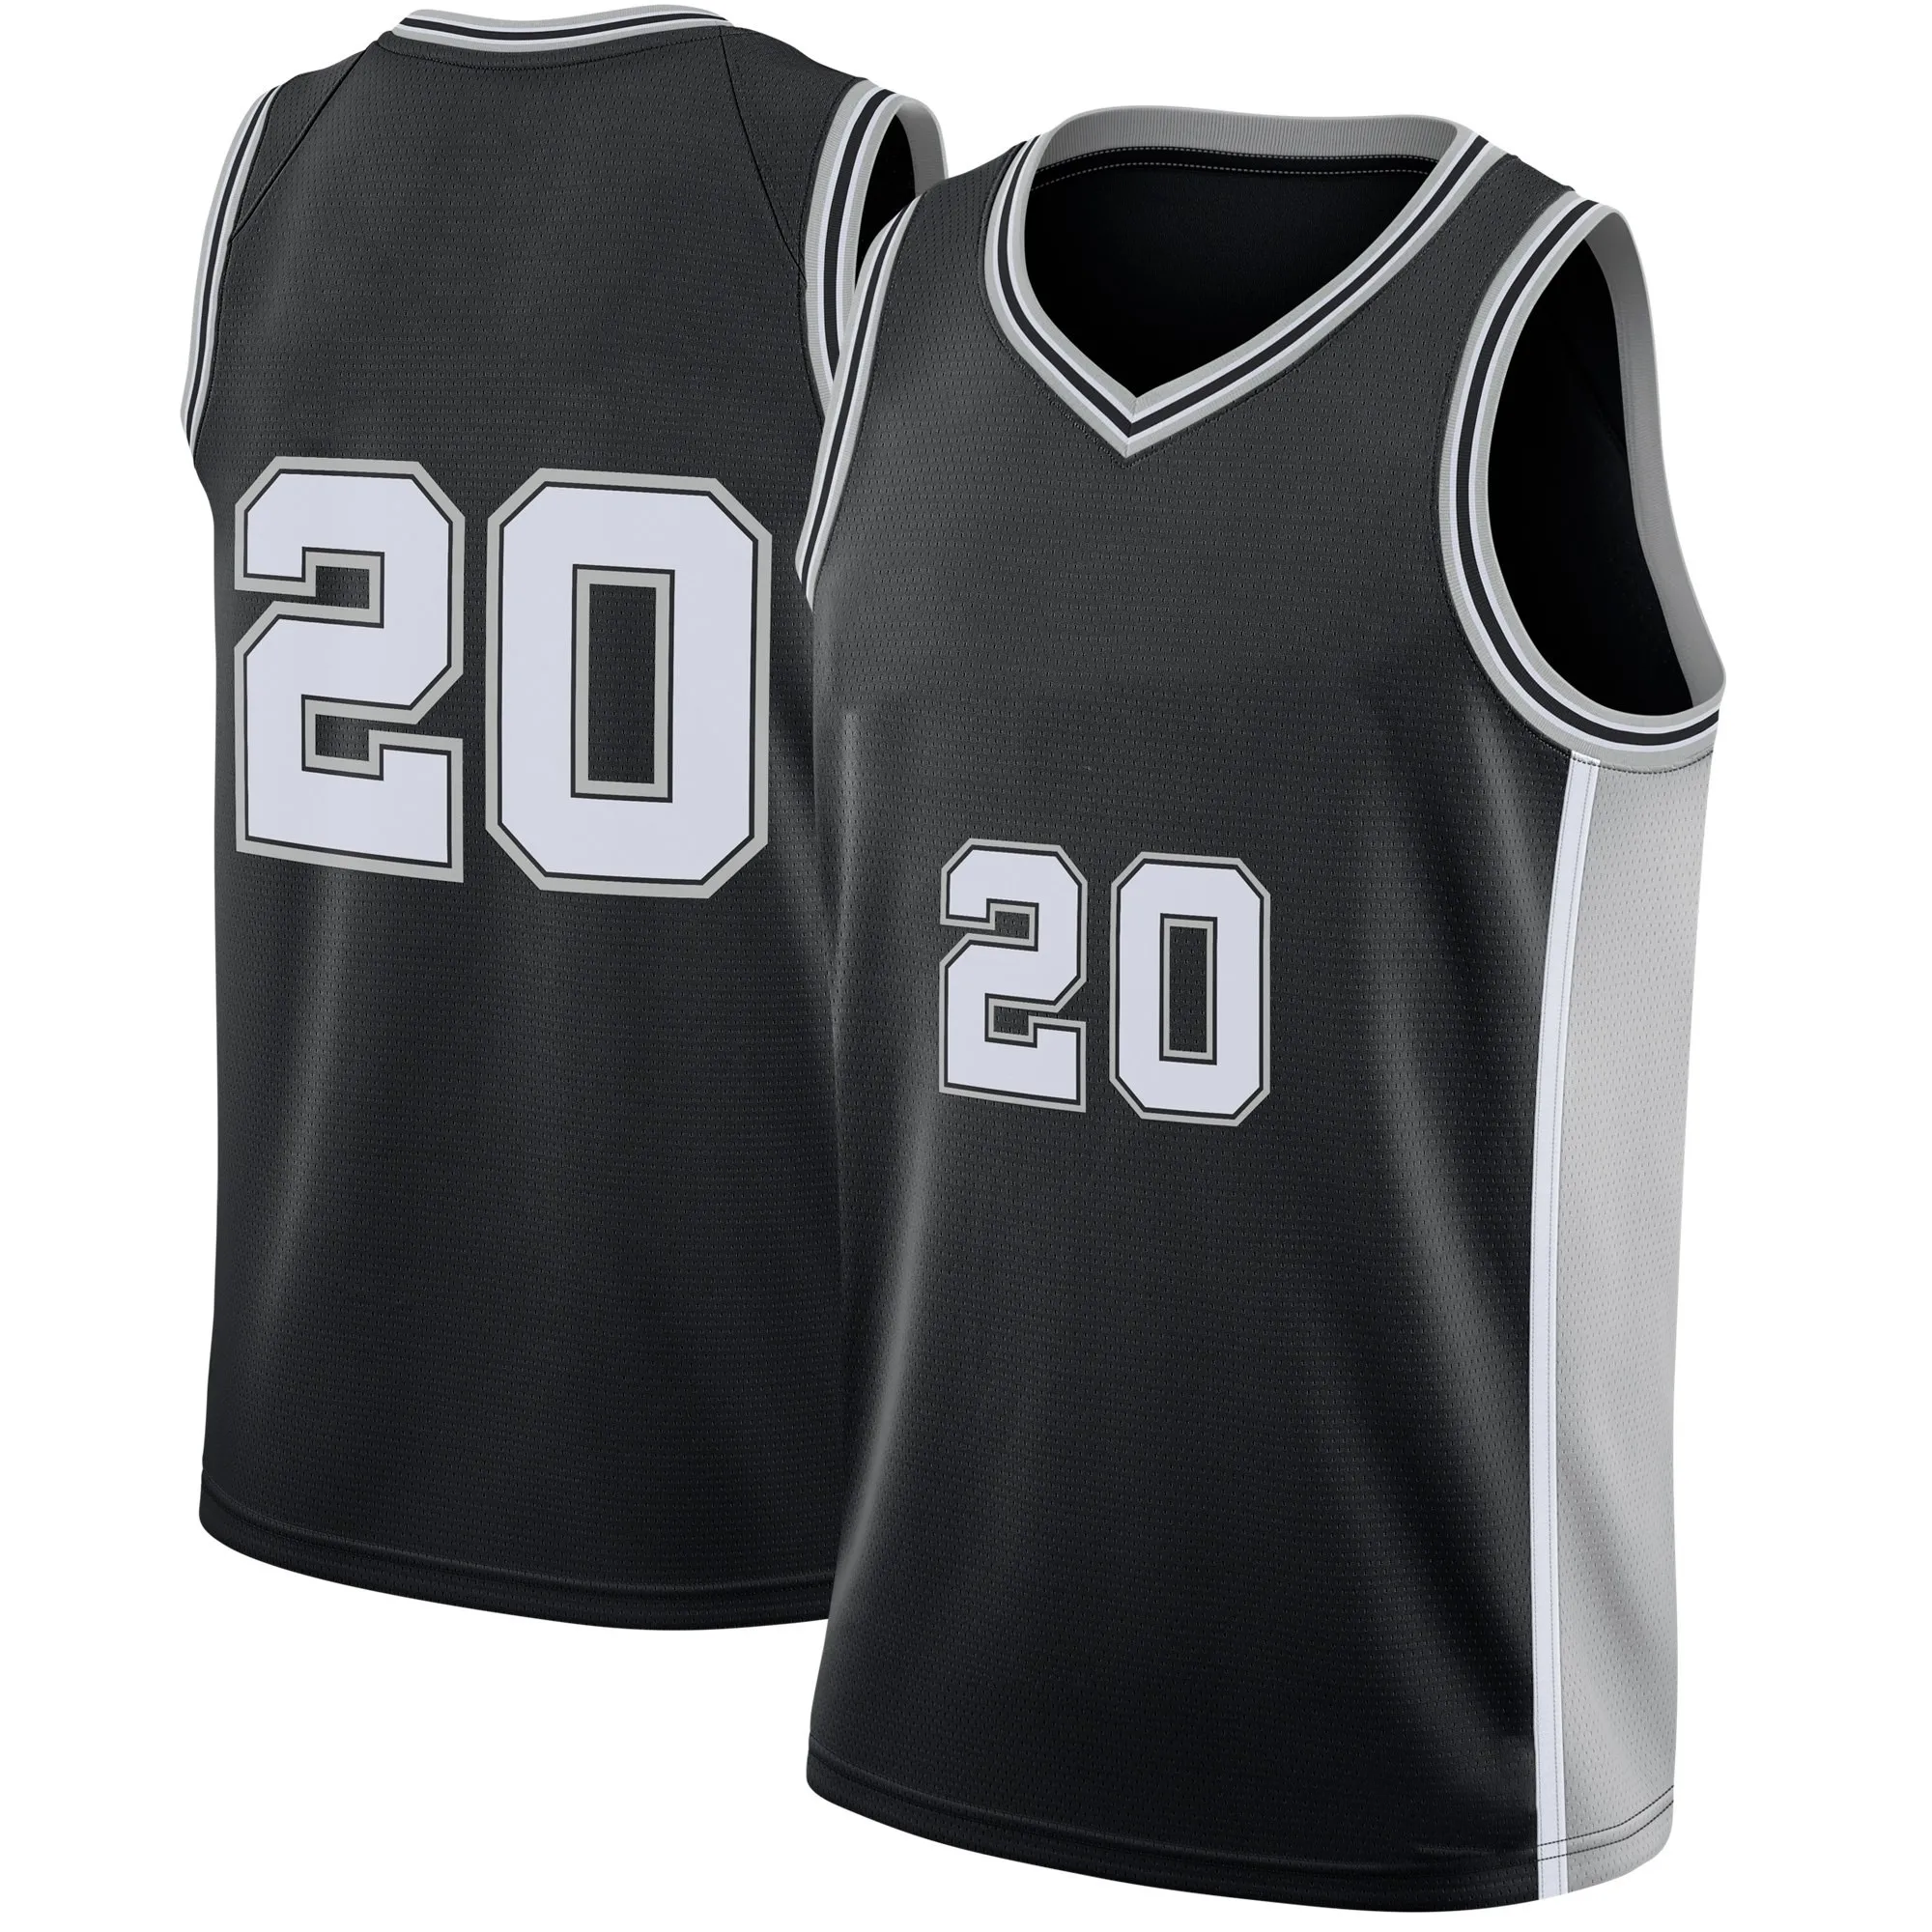 Custom Cheap Throwback College Basketball Jerseys - Buy Digital ...